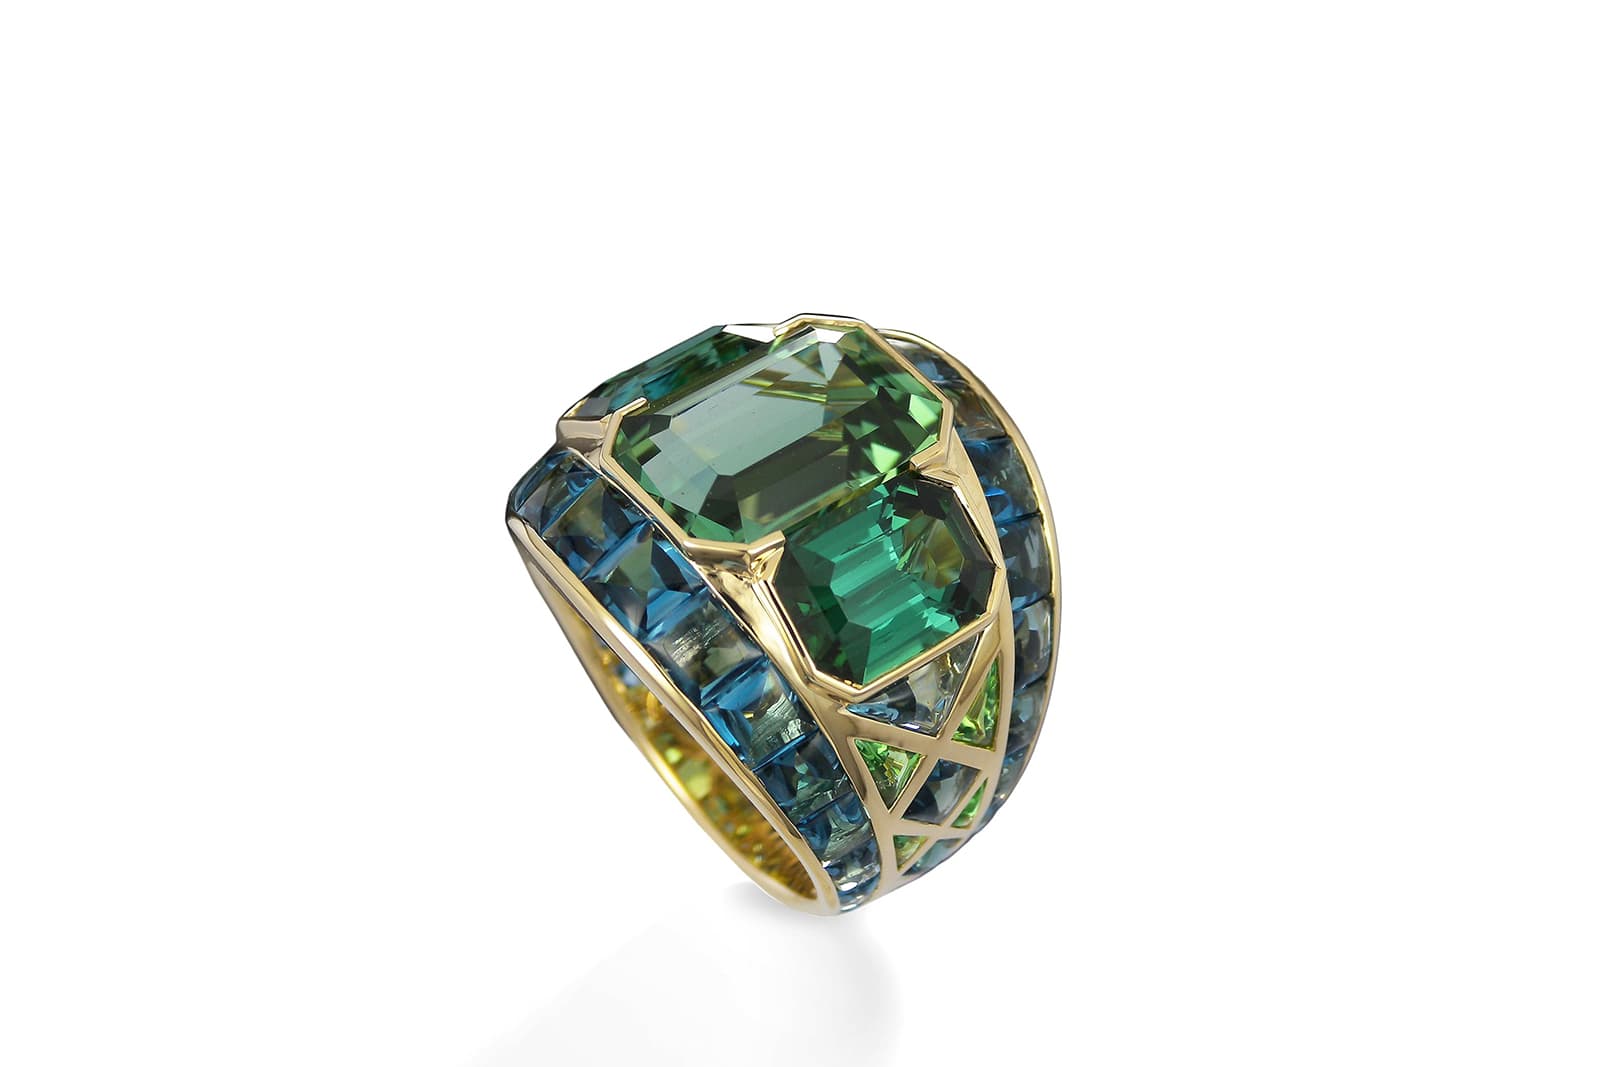 Enormous colourful gemstones in fine jewellery design